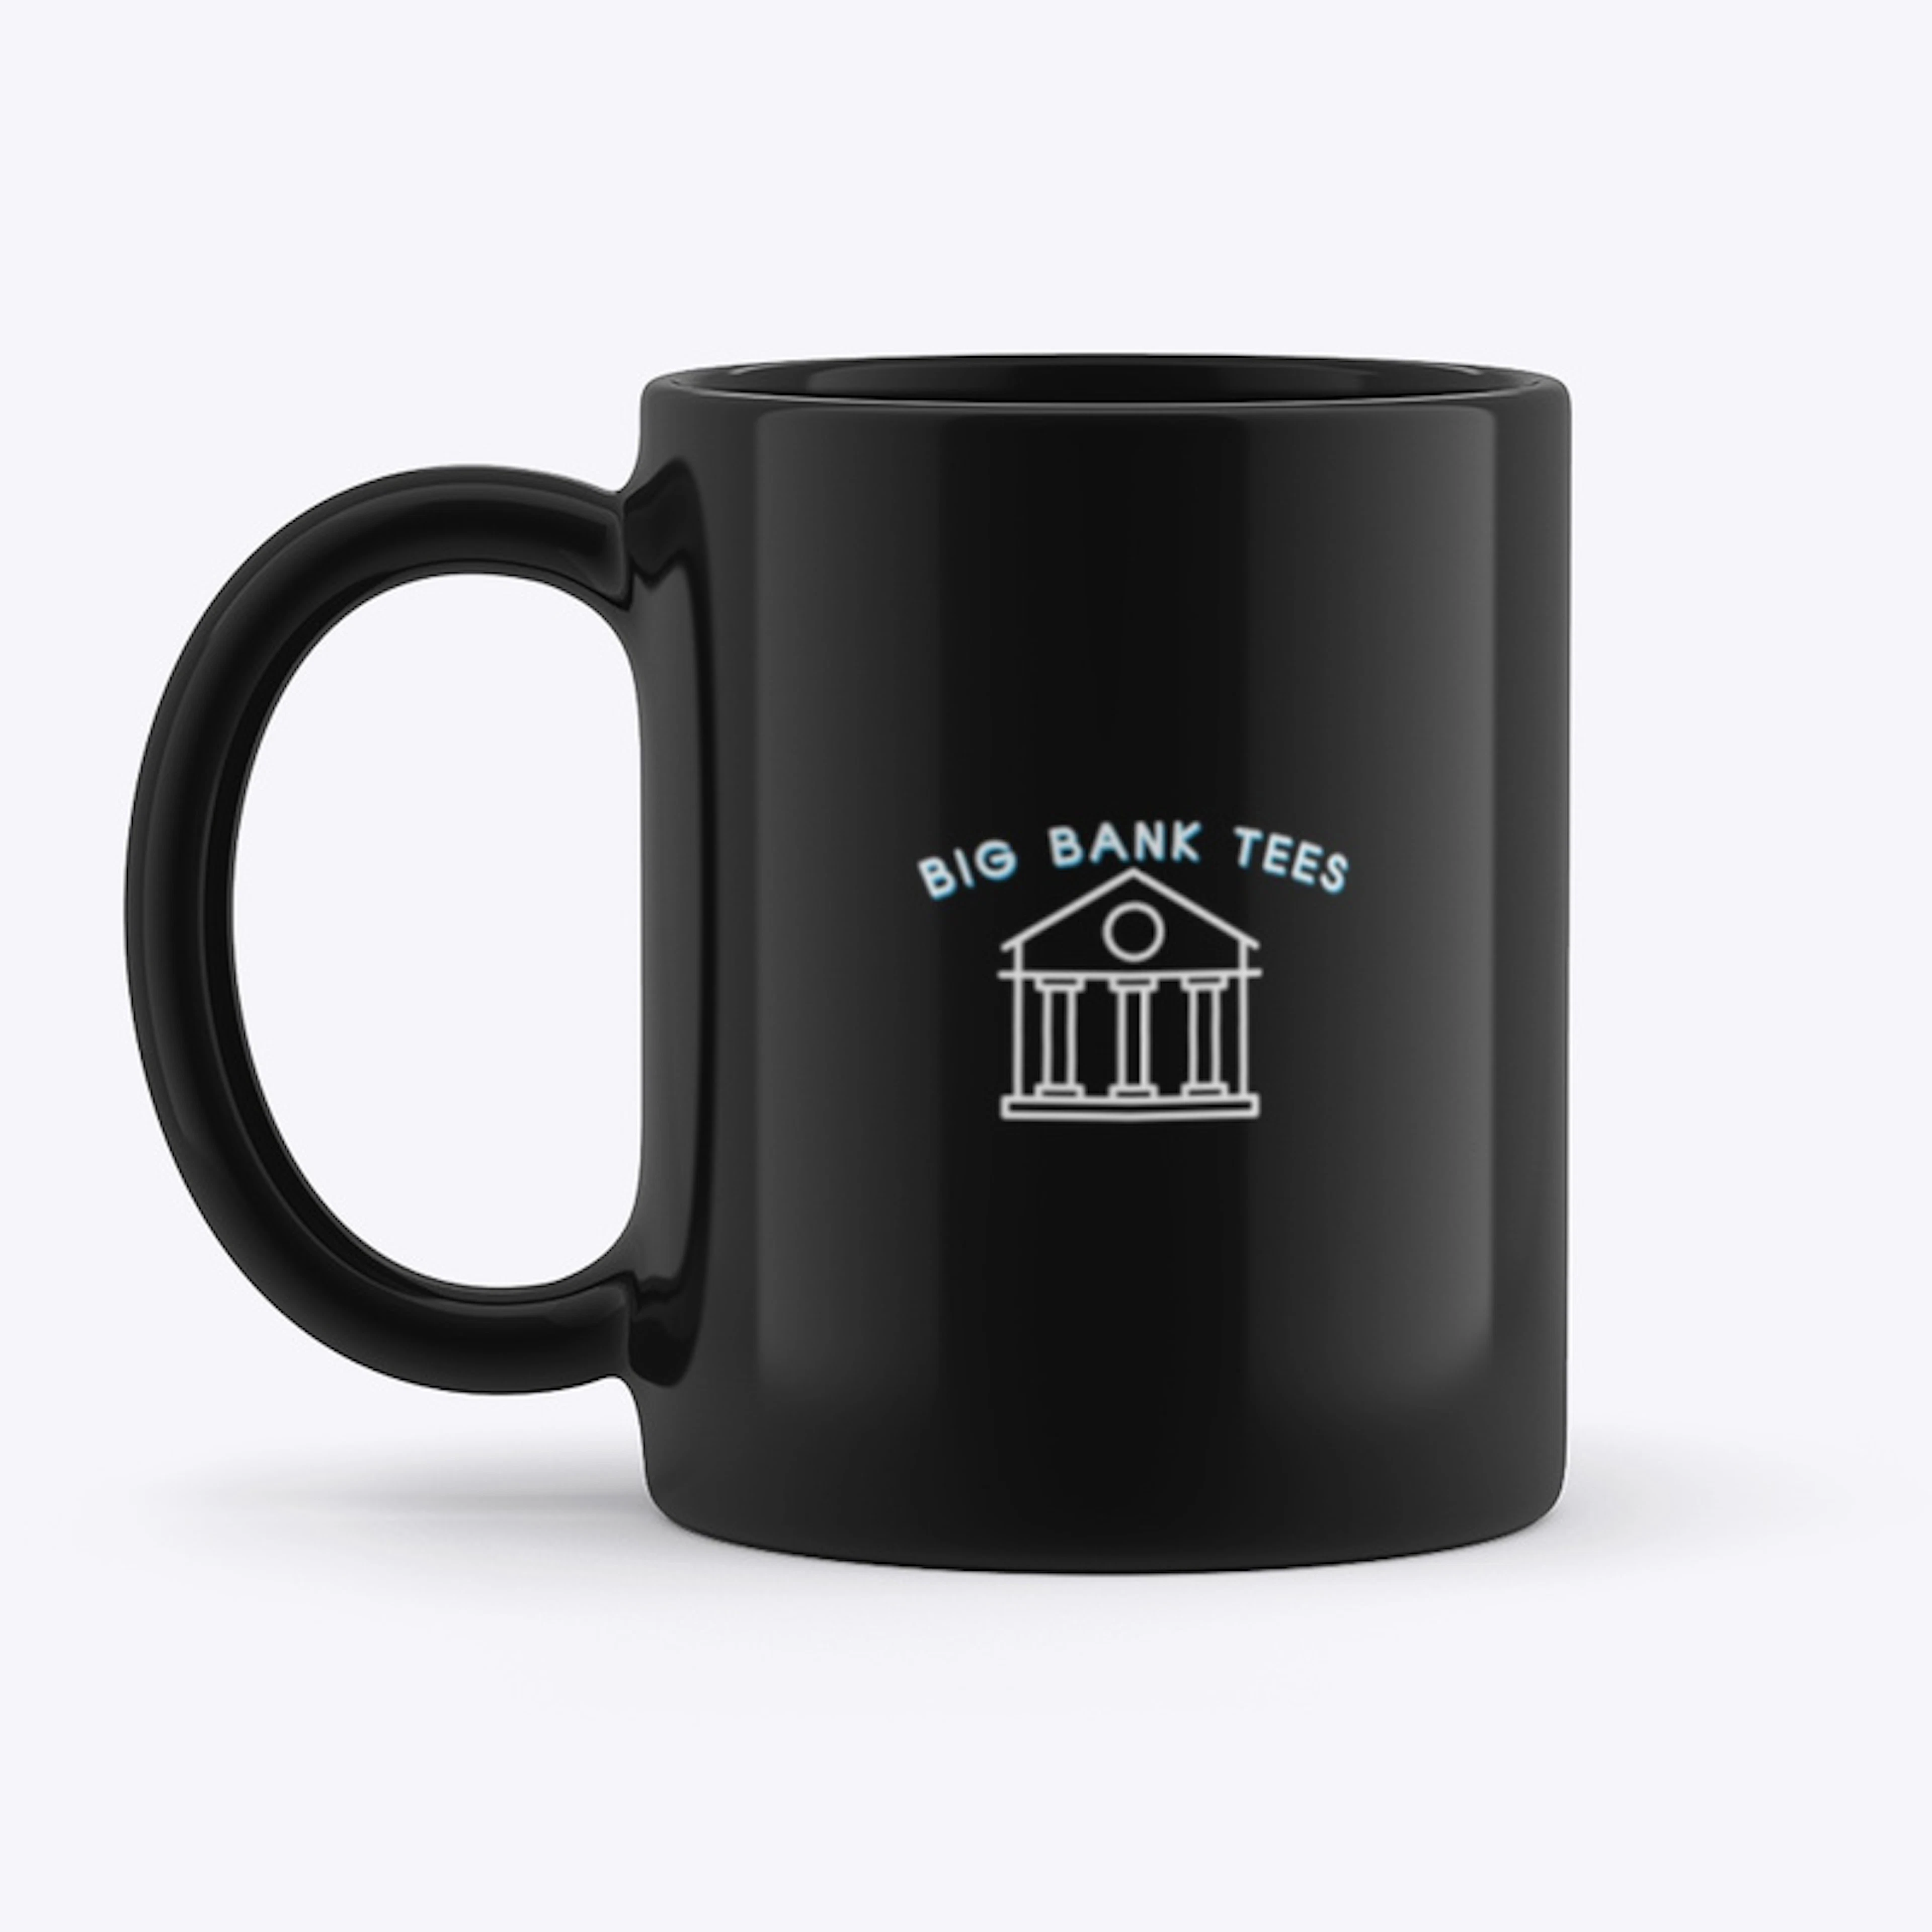 Big bank tees logo mug